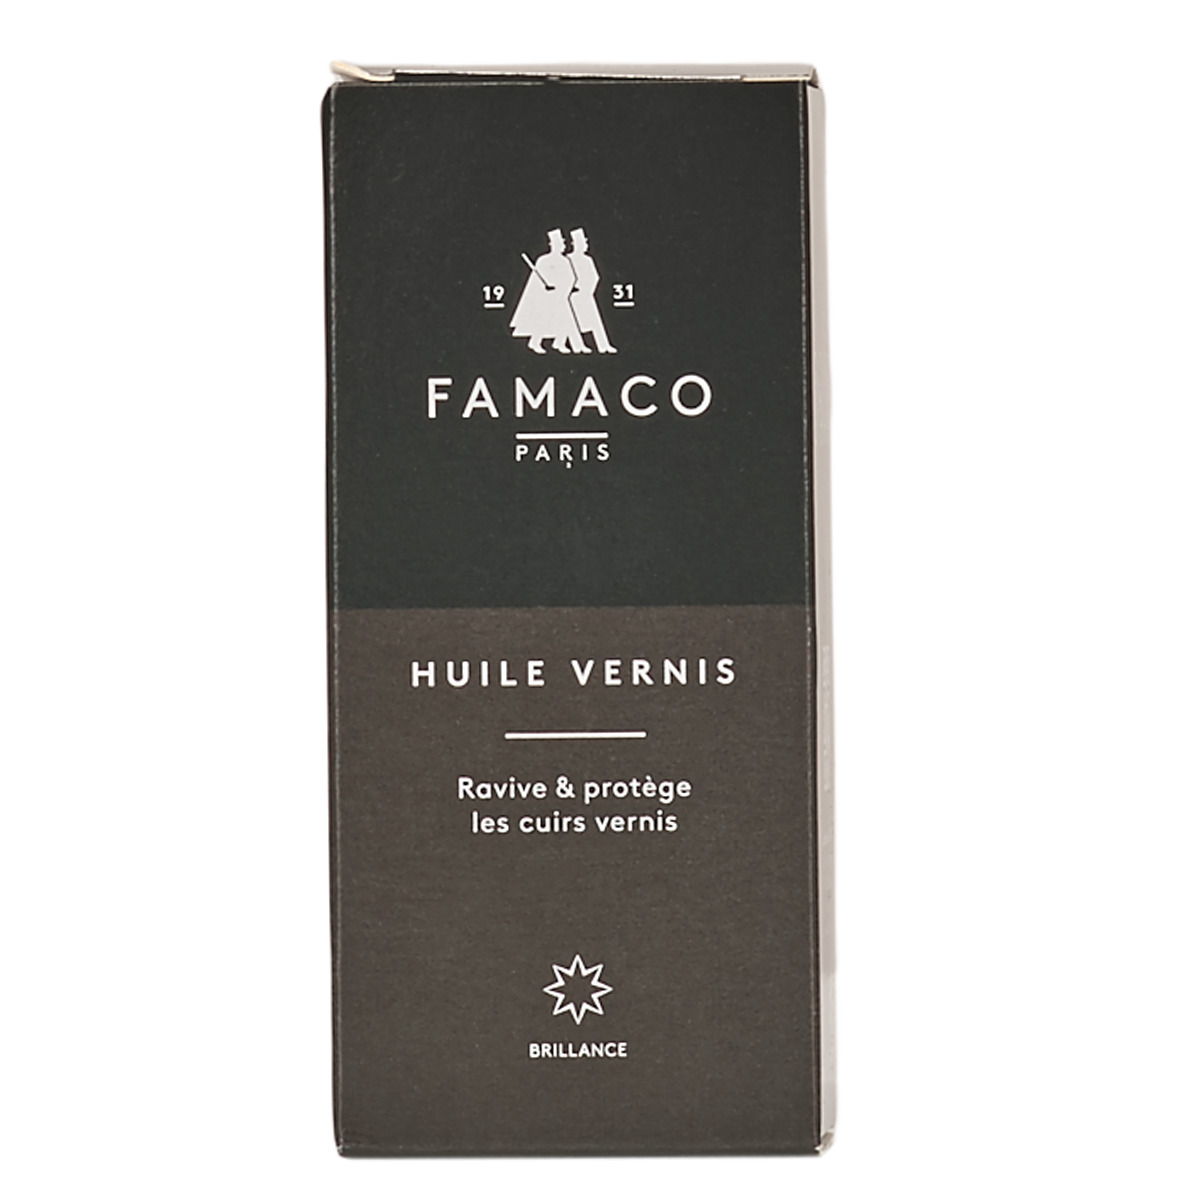 Accessorie Care Products Famaco FLACON HUILE VERNIS 100 ML FAMACO INCOLORE Neutral